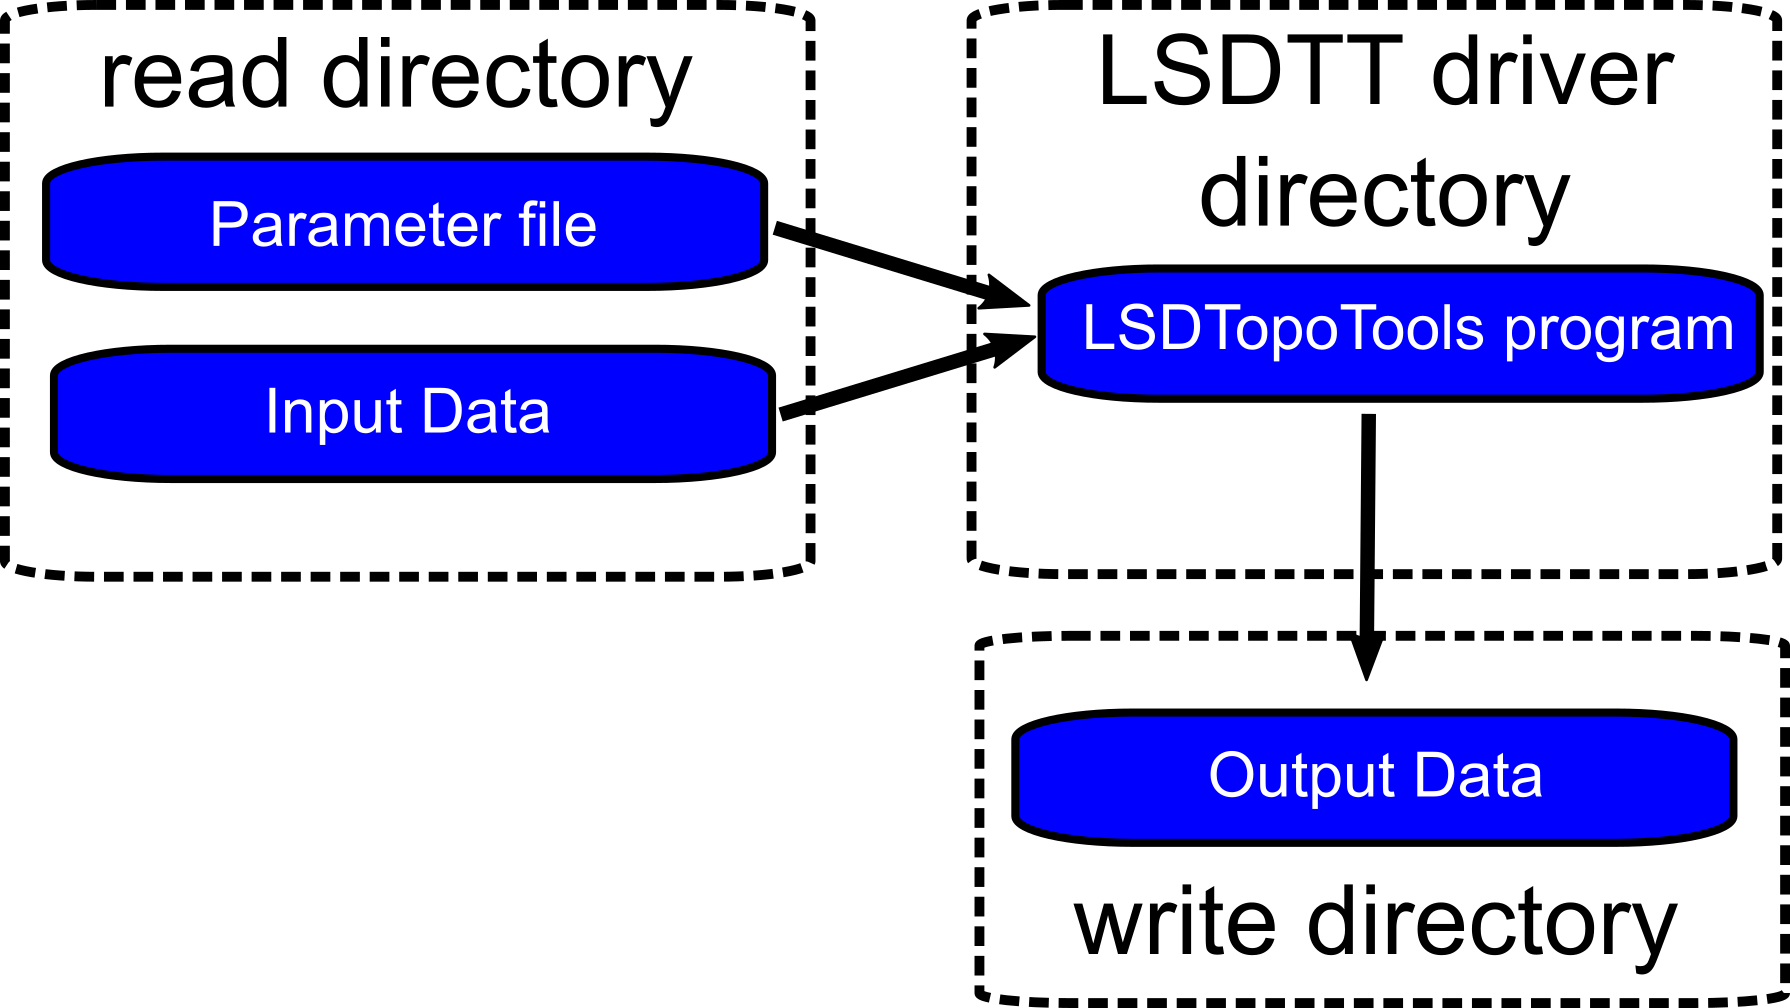 The basic structre of an LSDTopoTools analysis